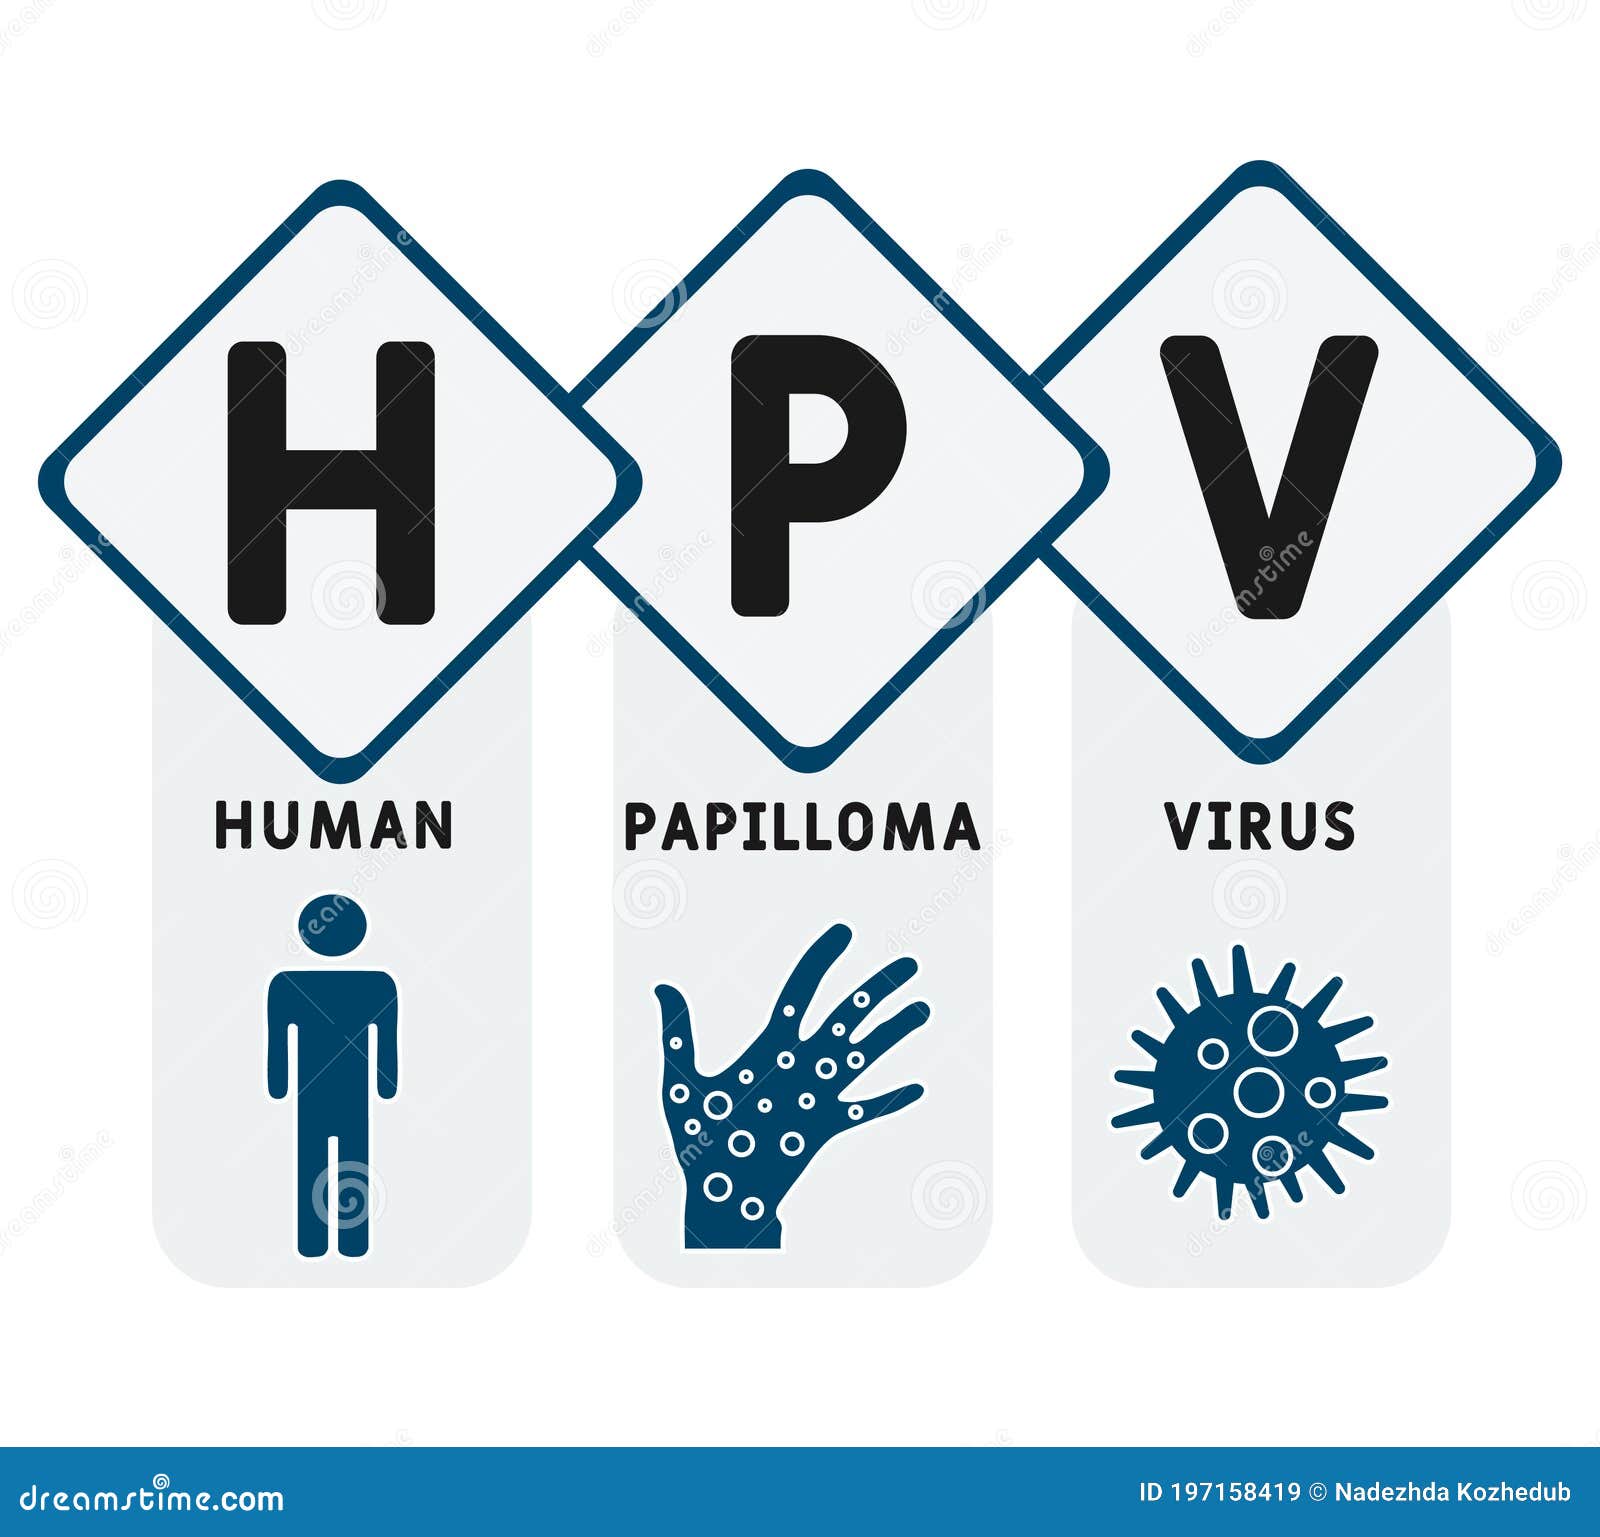 nhs human papillomavirus vaccine